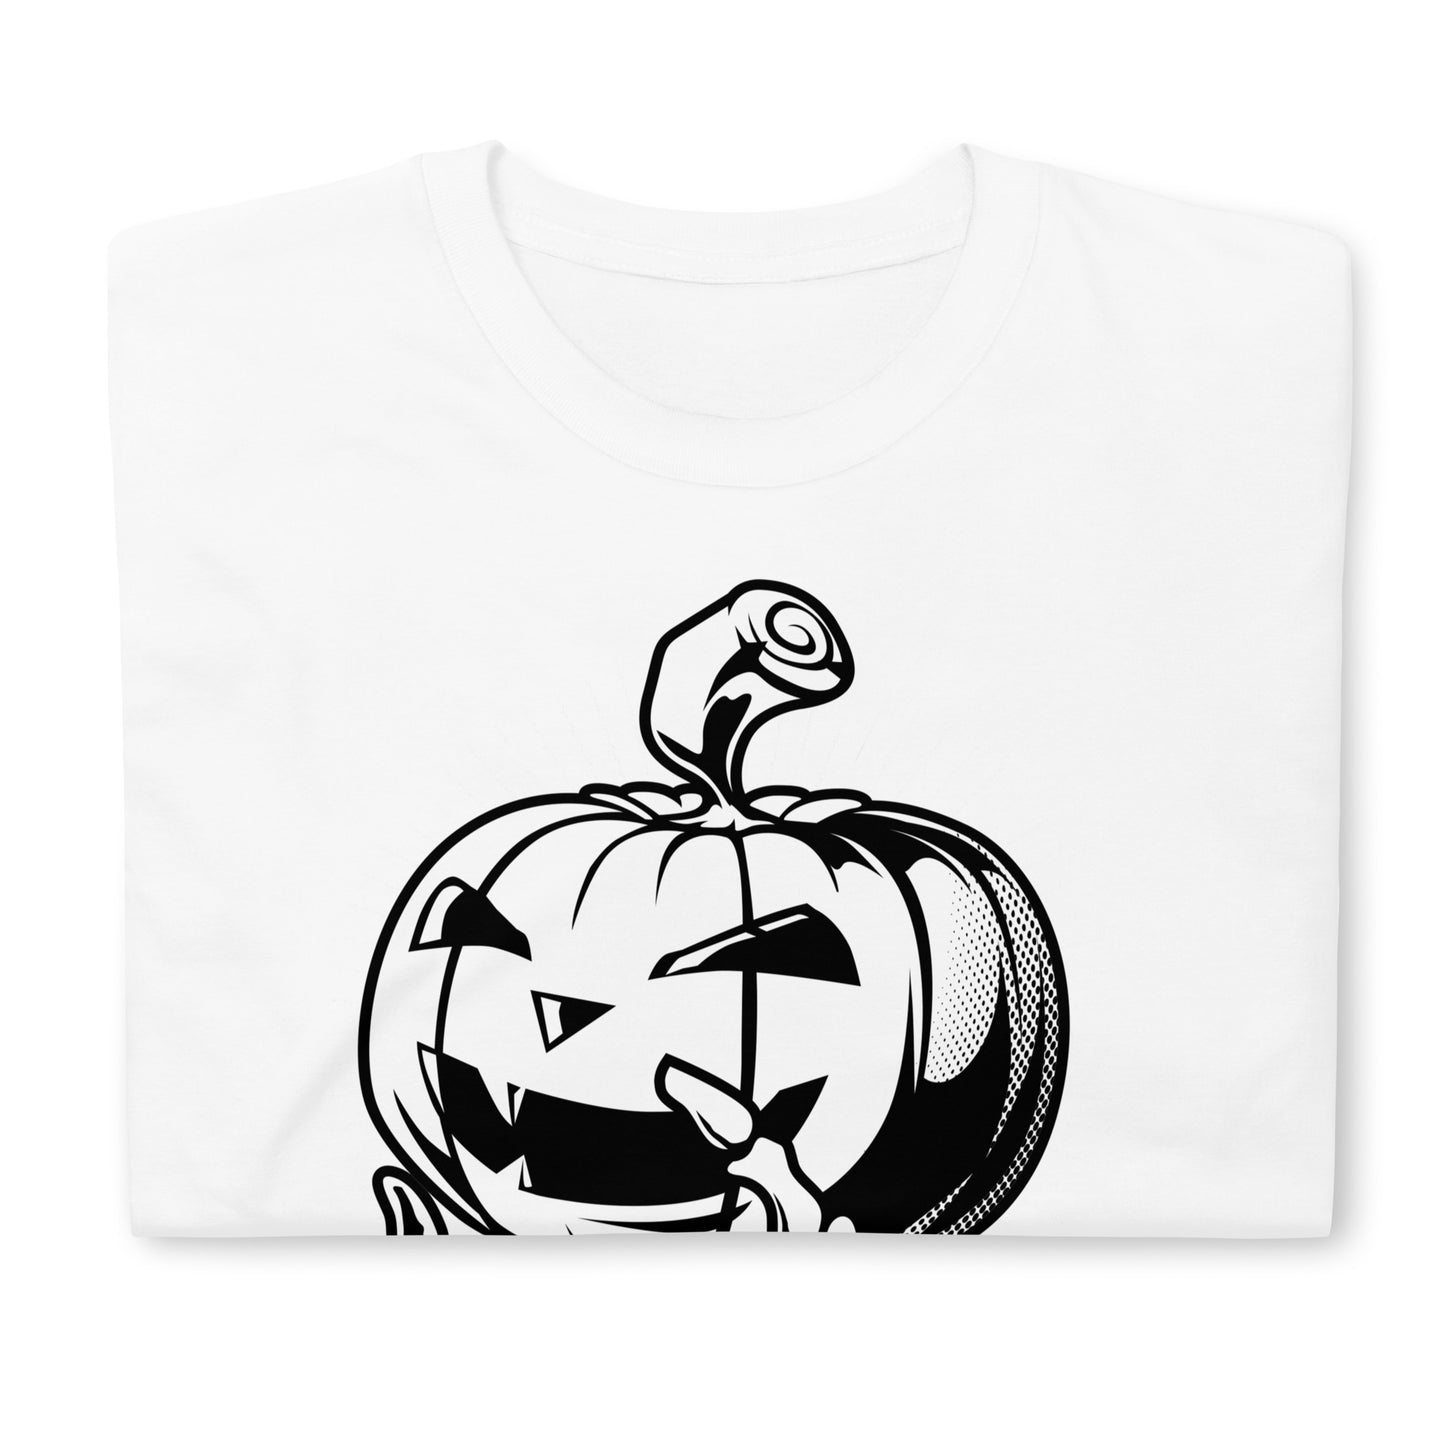 Pumpkin Skeleton hand Halloween Unisex T-Shirt